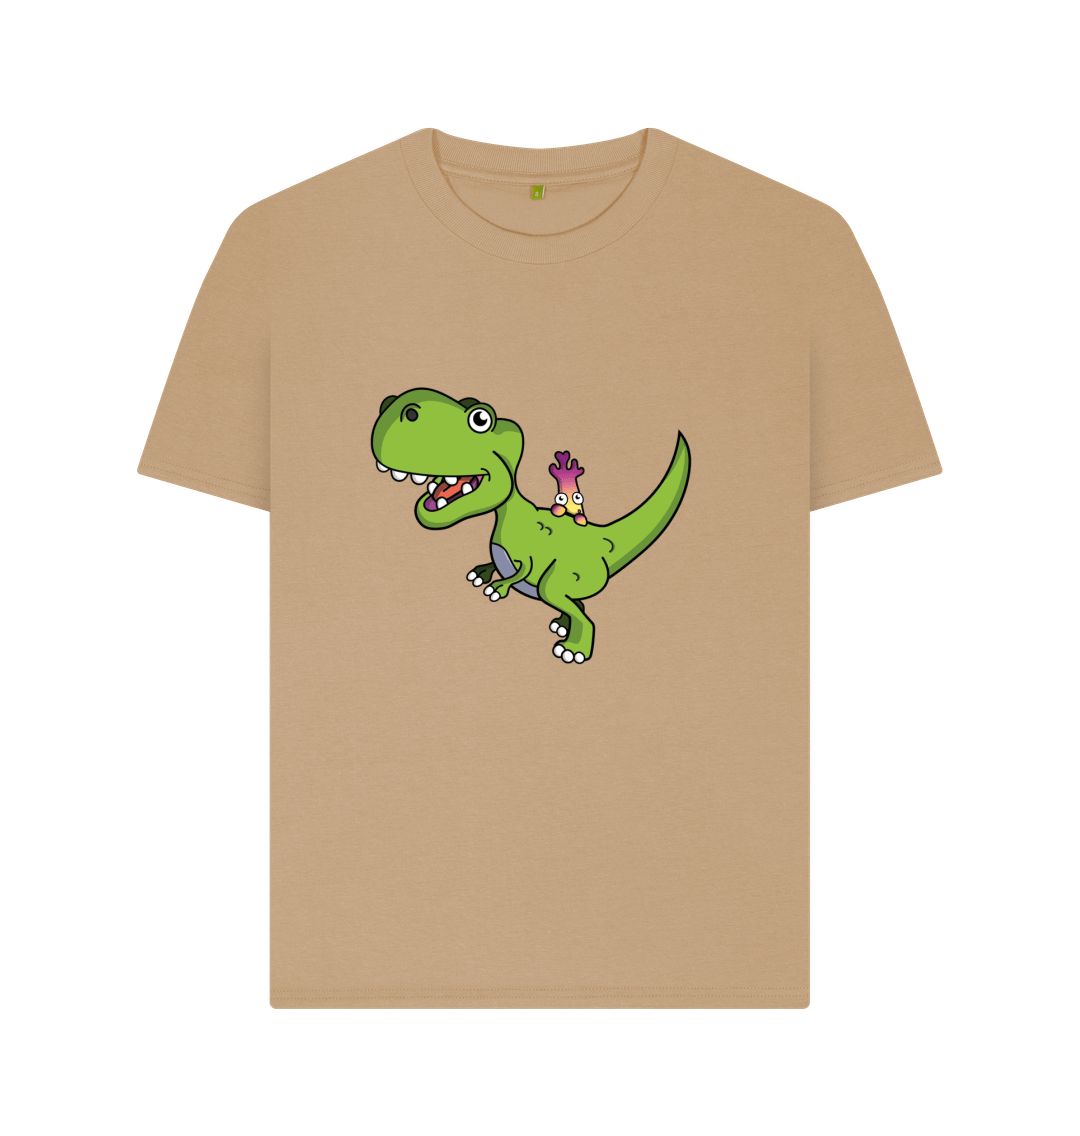 Sand Organic Cotton Shy-nosaur Dinosaur Graphic Only Mental Health Women's T-Shirt